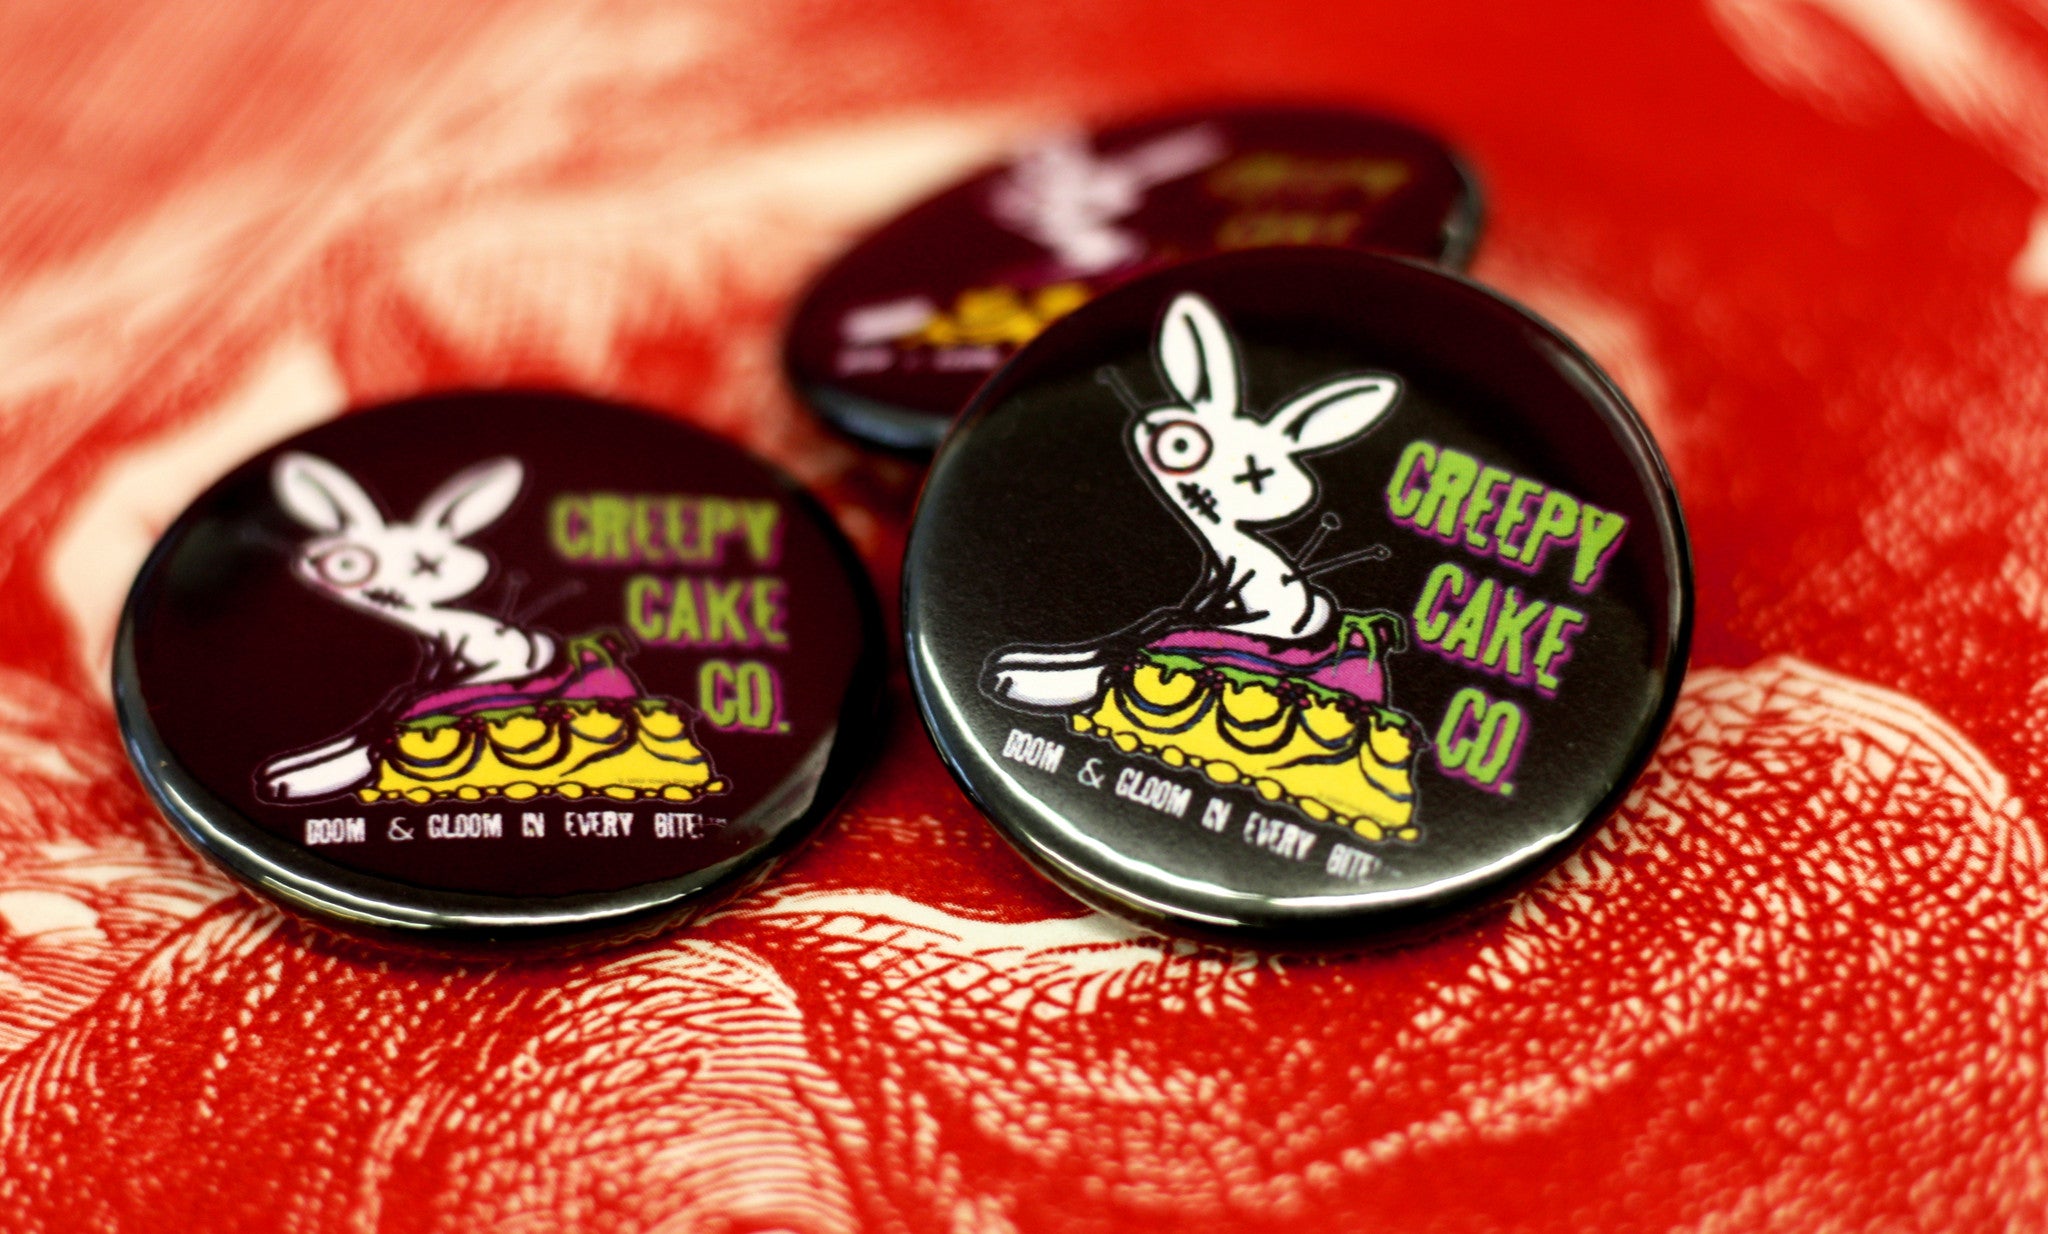 Creepy Custom Buttons, Creepy Cake Co, Custom 1.5" Round Buttons, bakery buttons, 